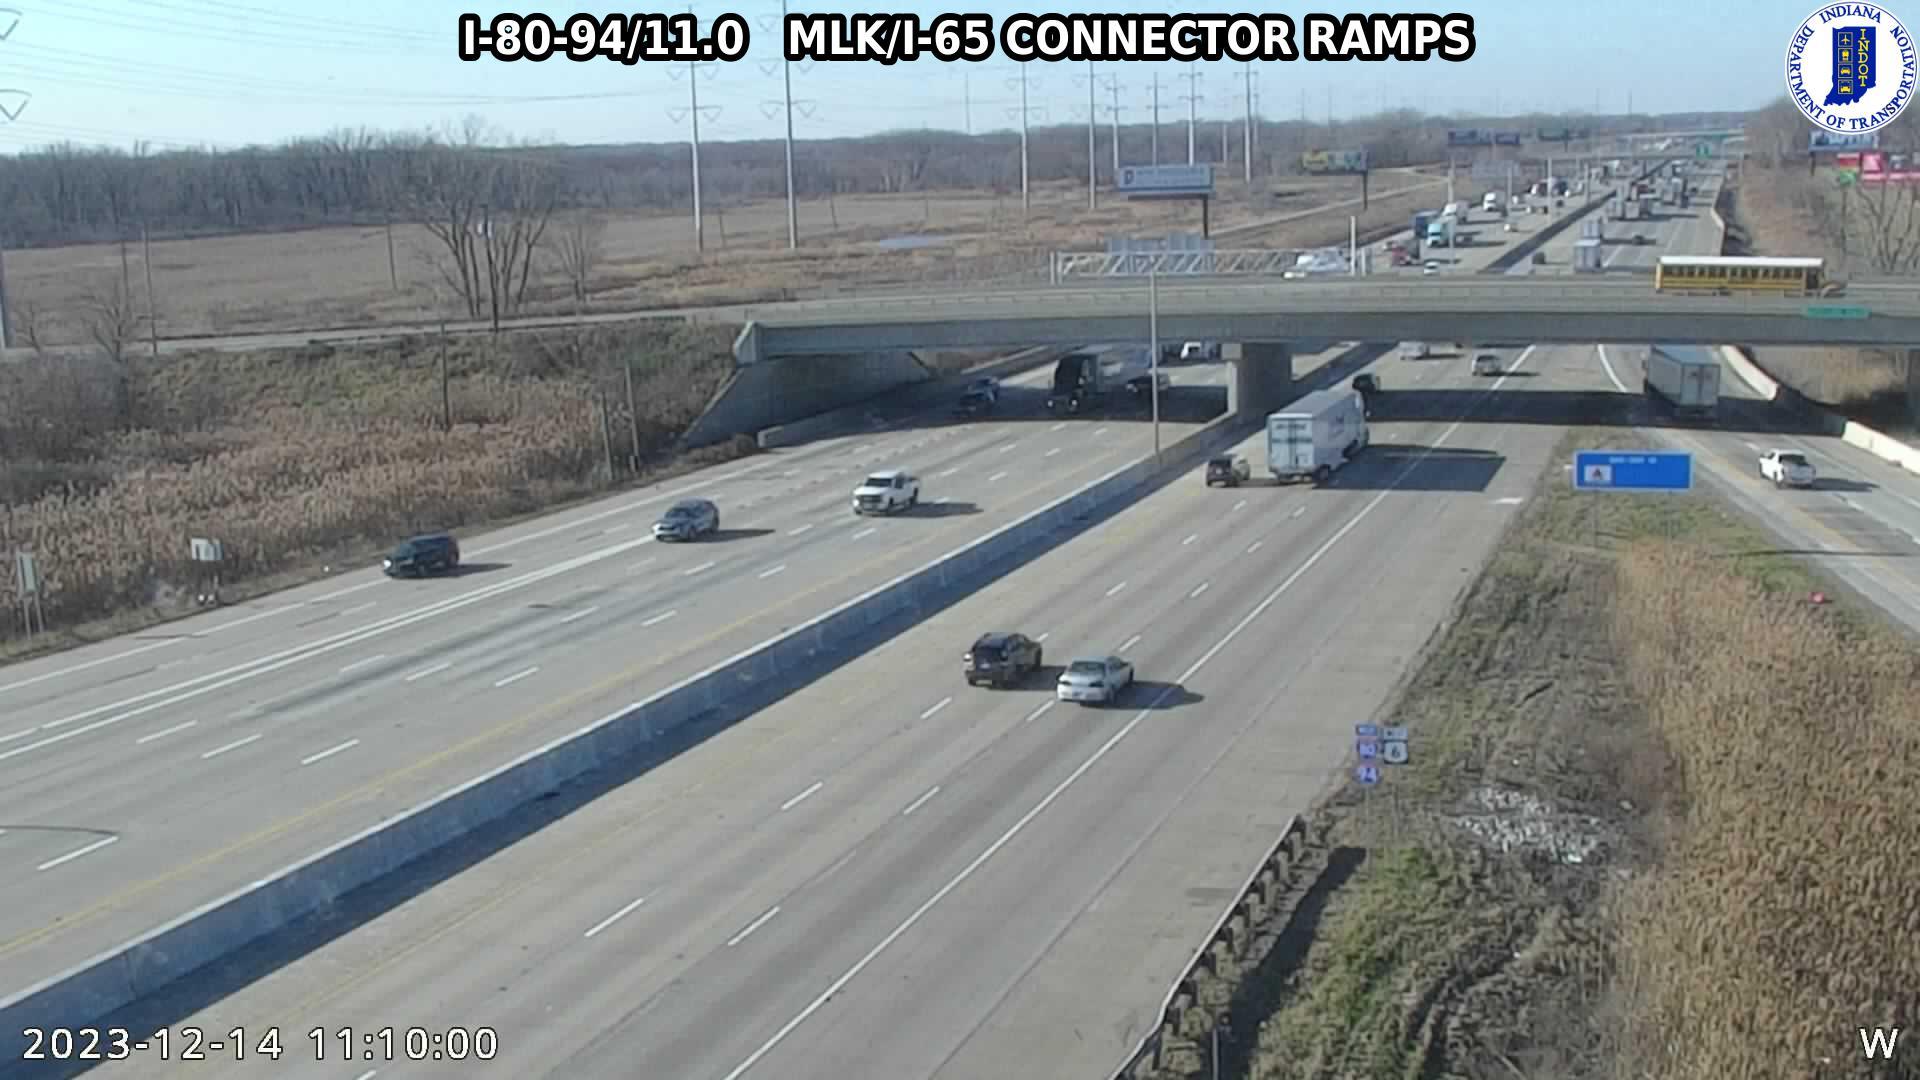 Traffic Cam Gary: I-94: I-80-94/11.0 MLK/I-65 CONNECTOR RAMPS